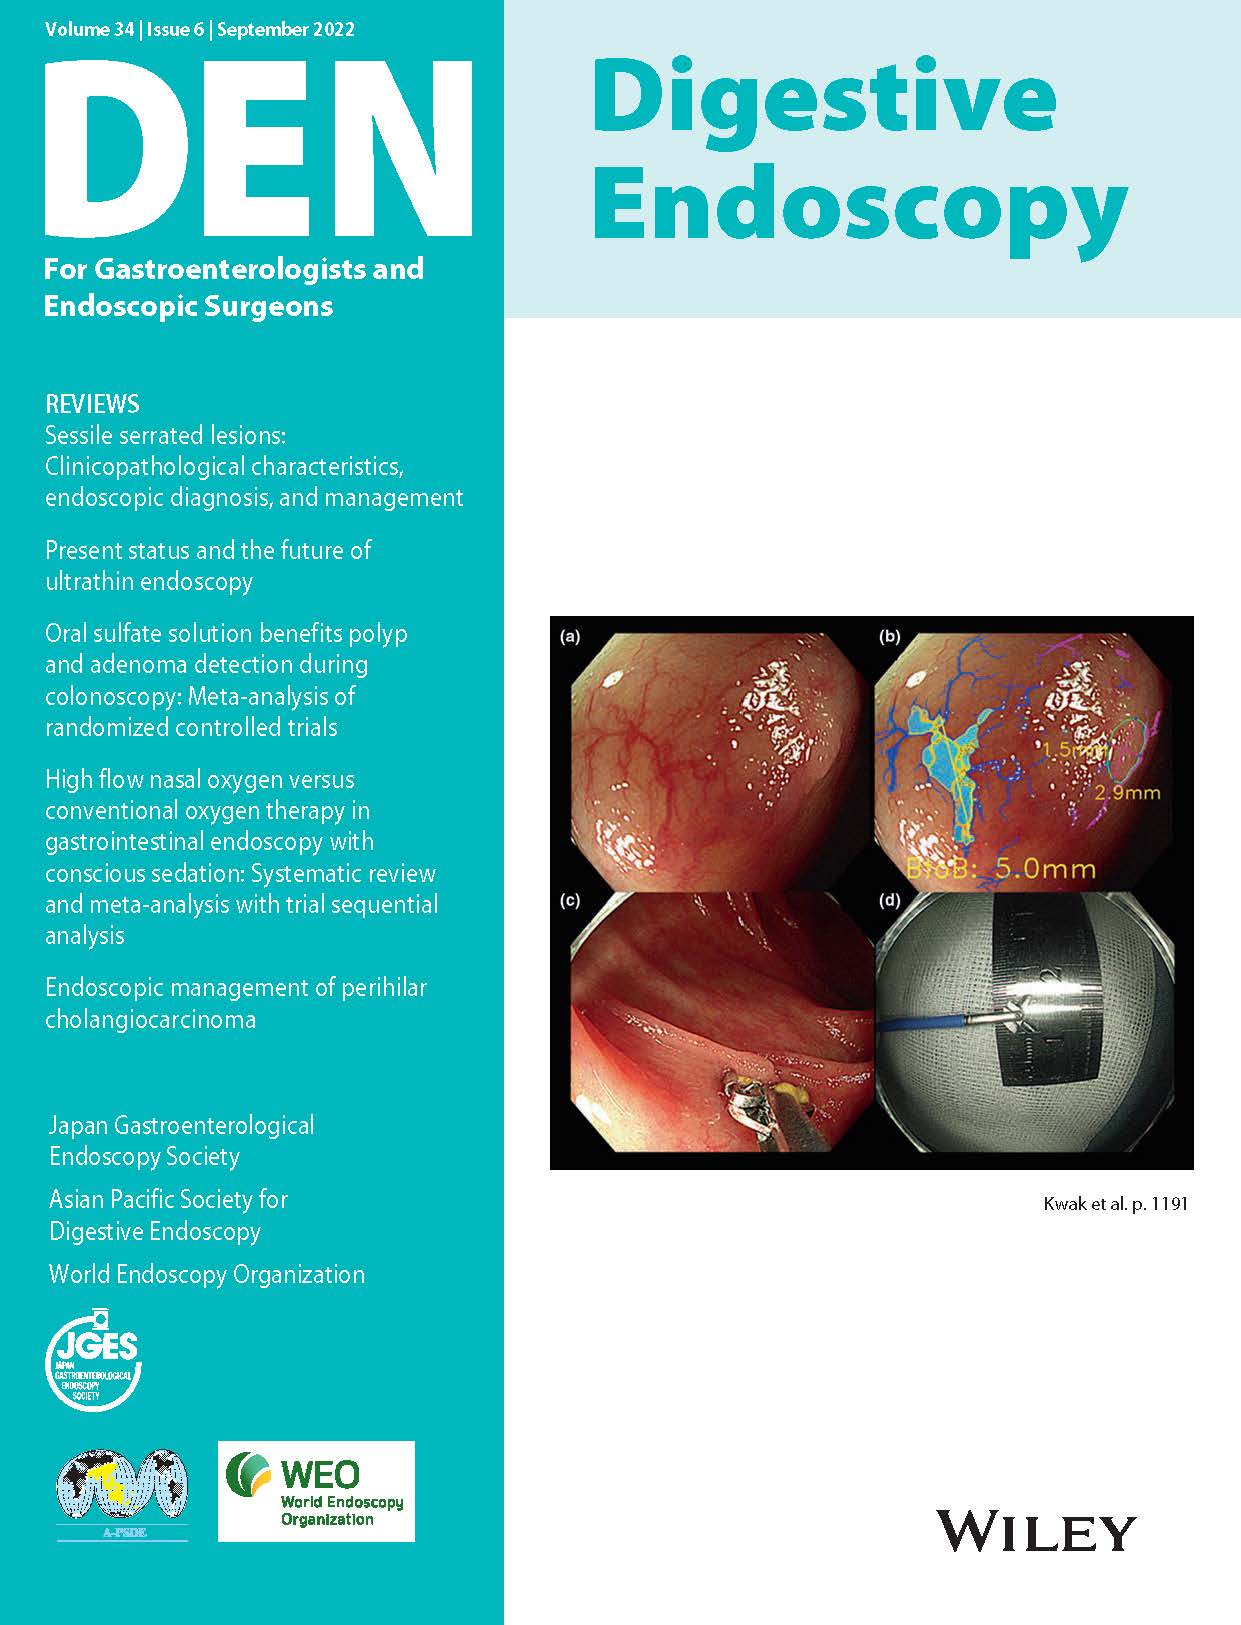 Digestive Endoscopy Vol34-6